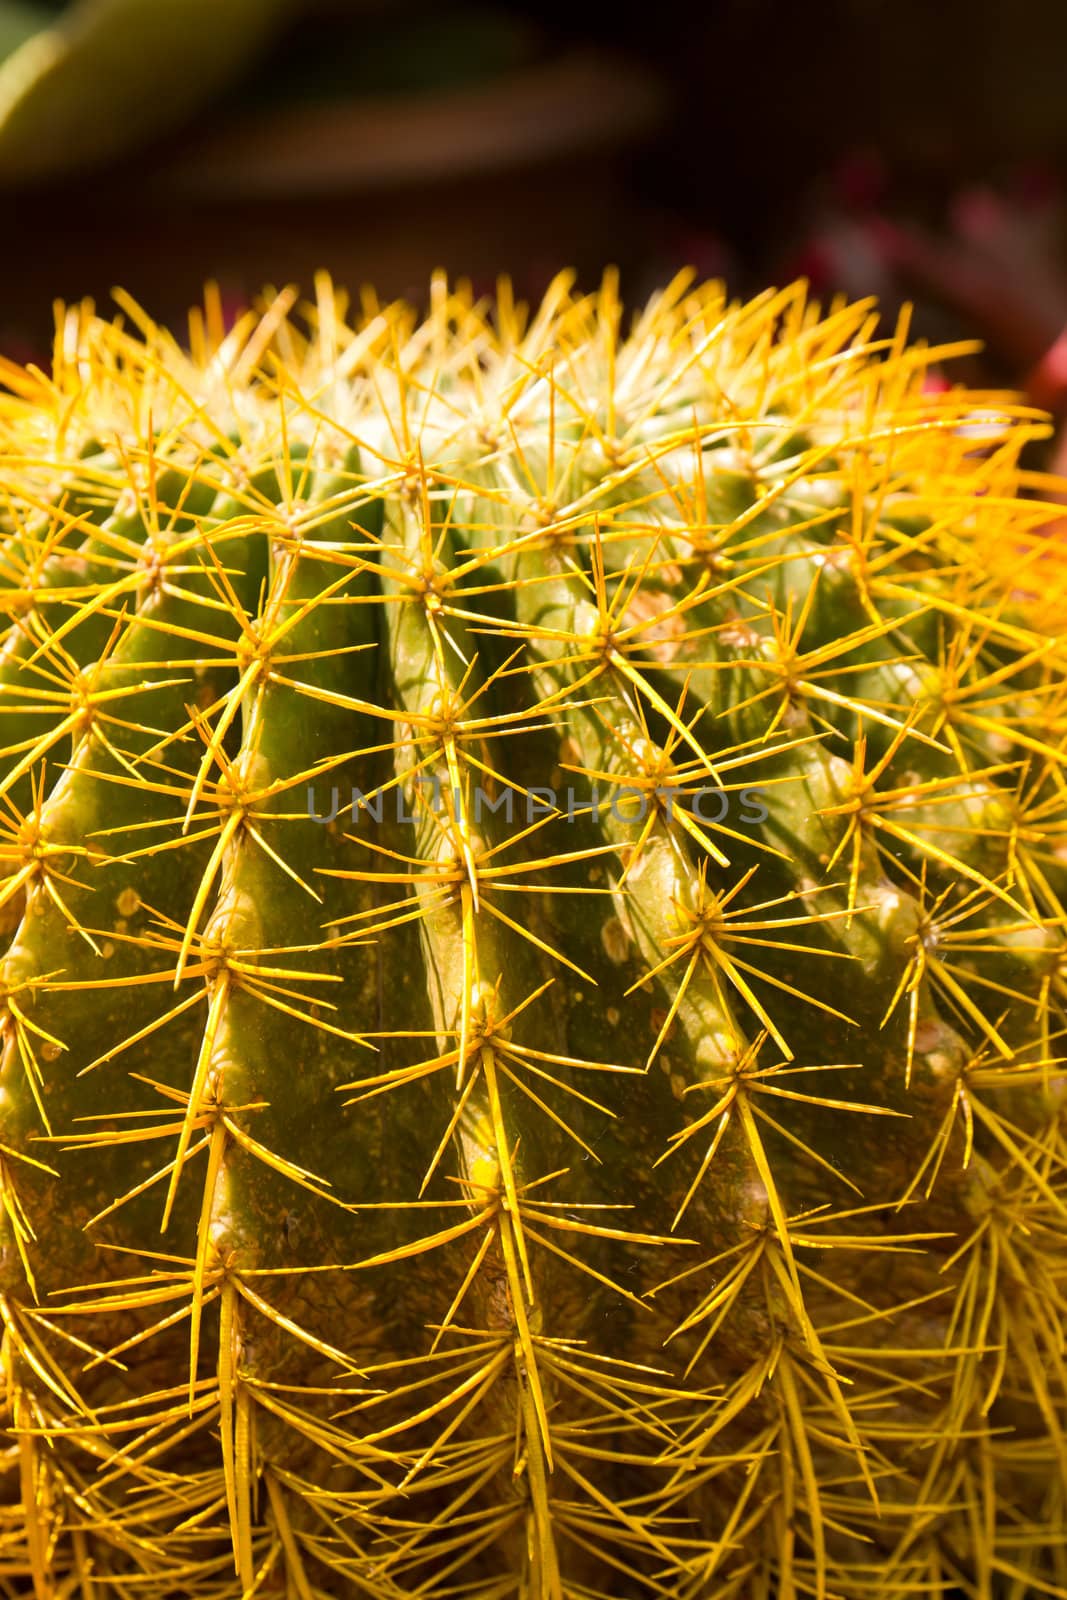 Cactus thorns by stoonn